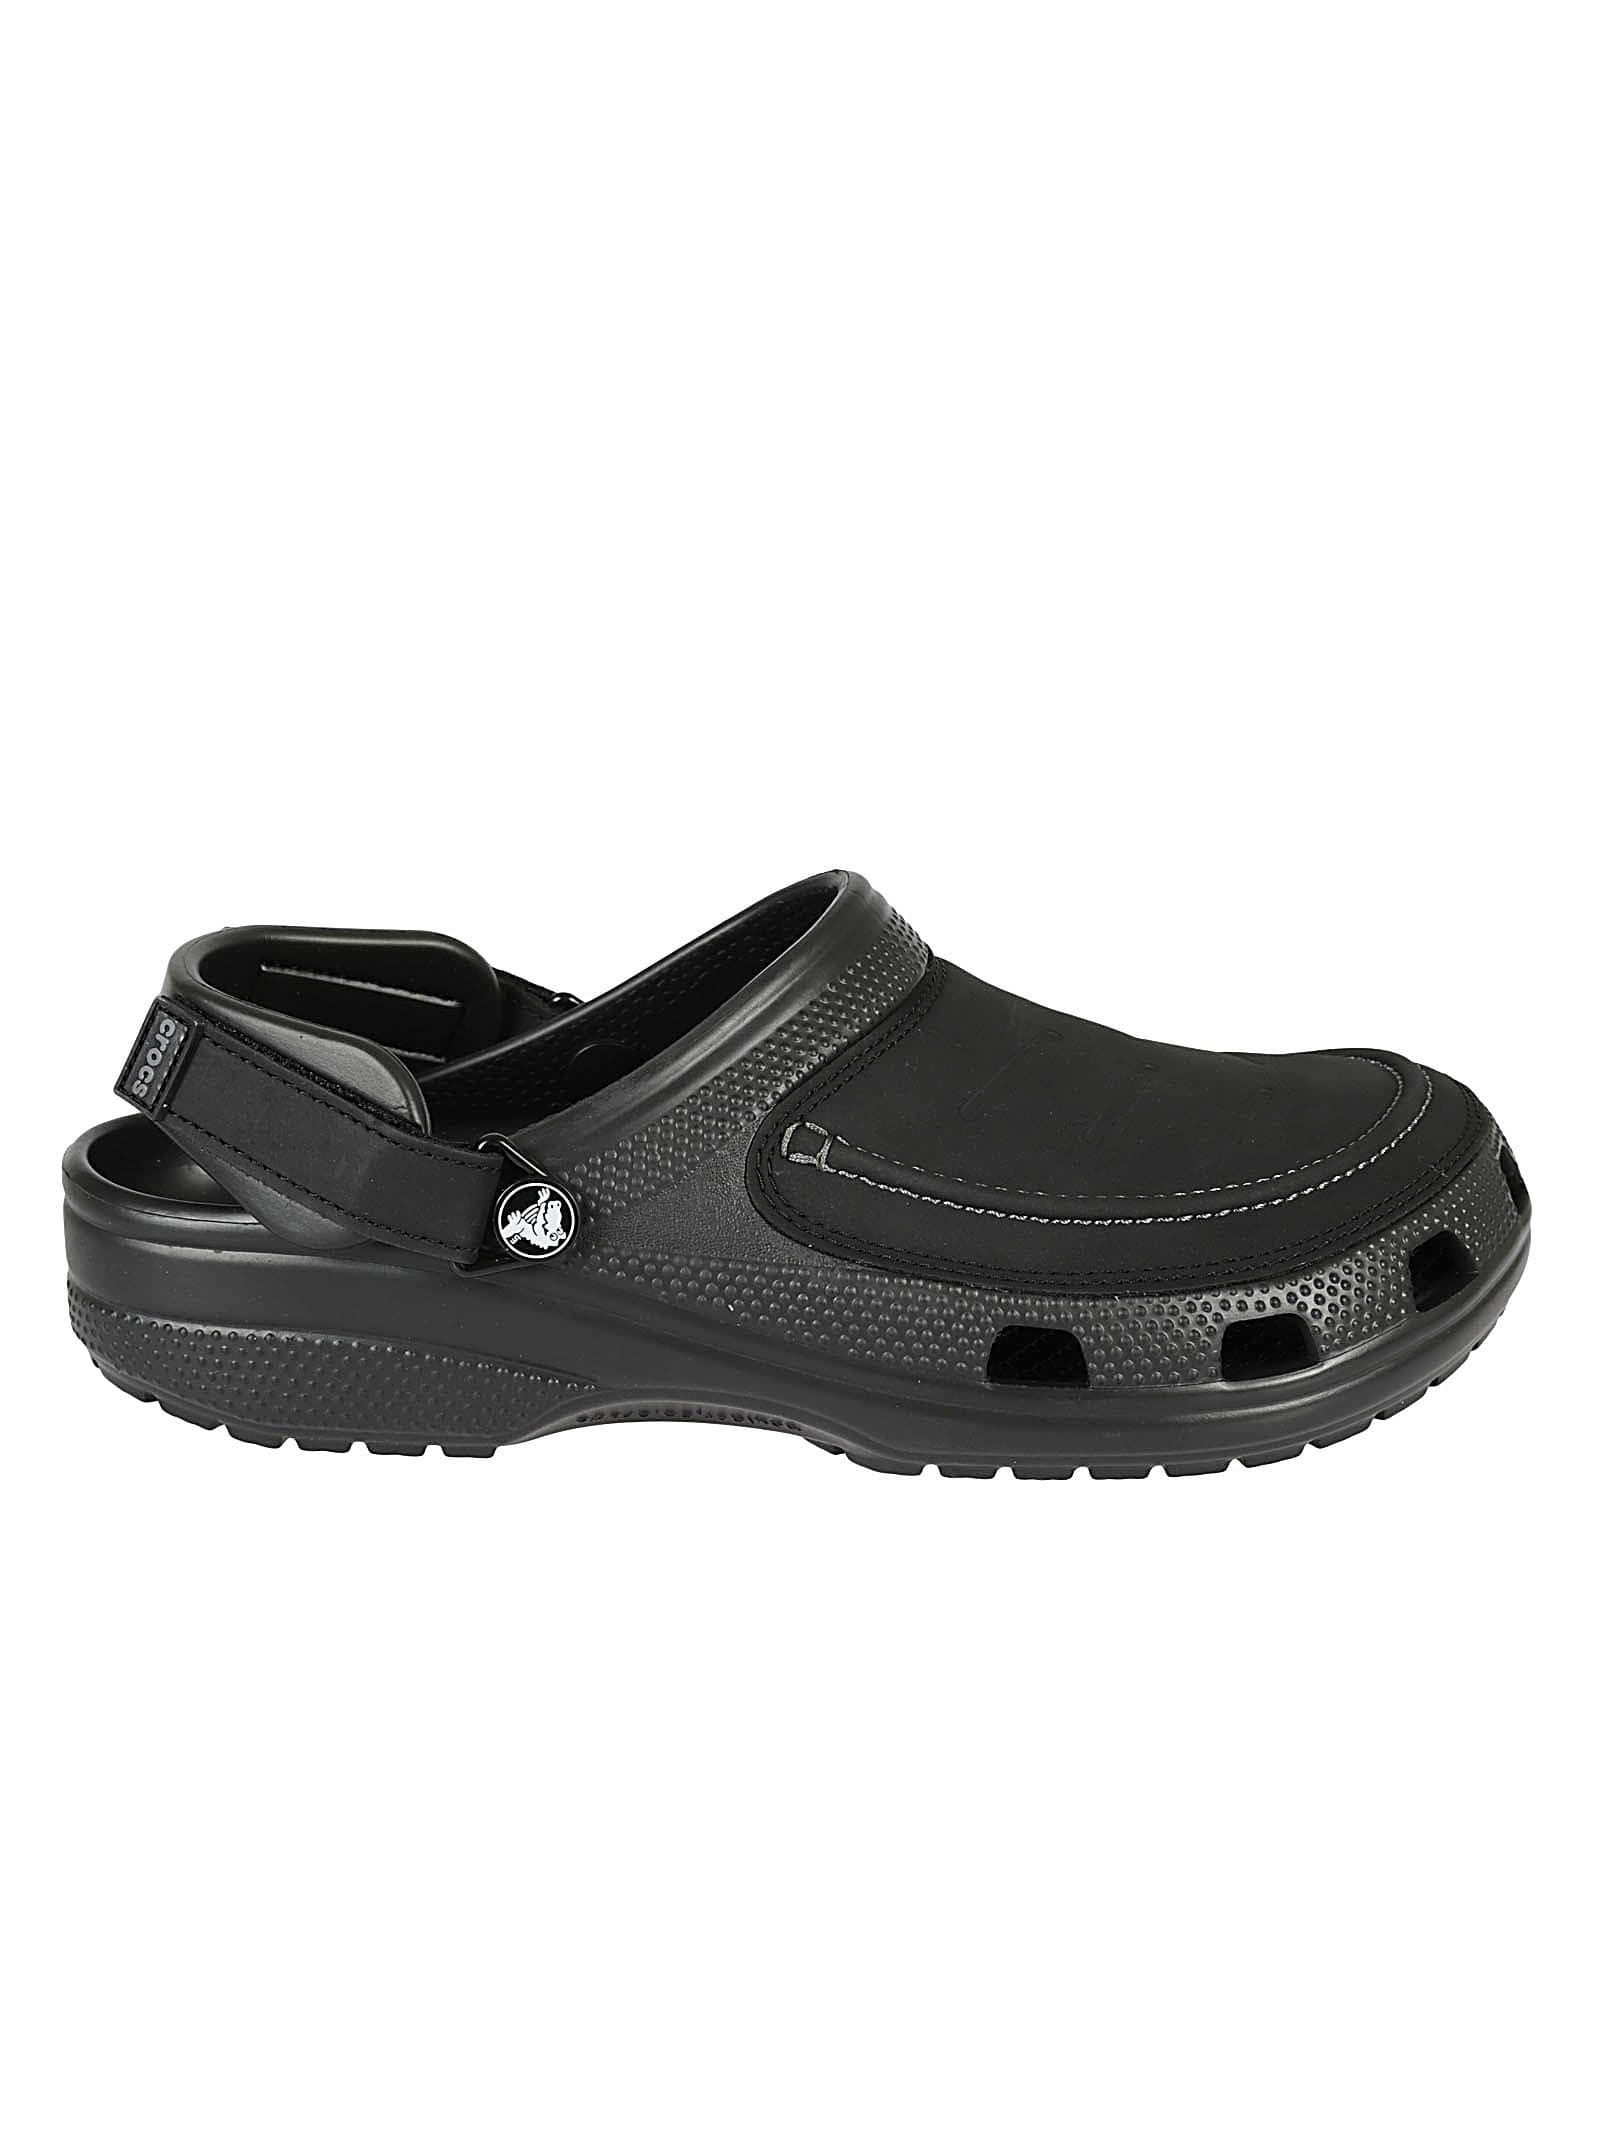 Crocs Yukon Vista Ii Clog Shoes